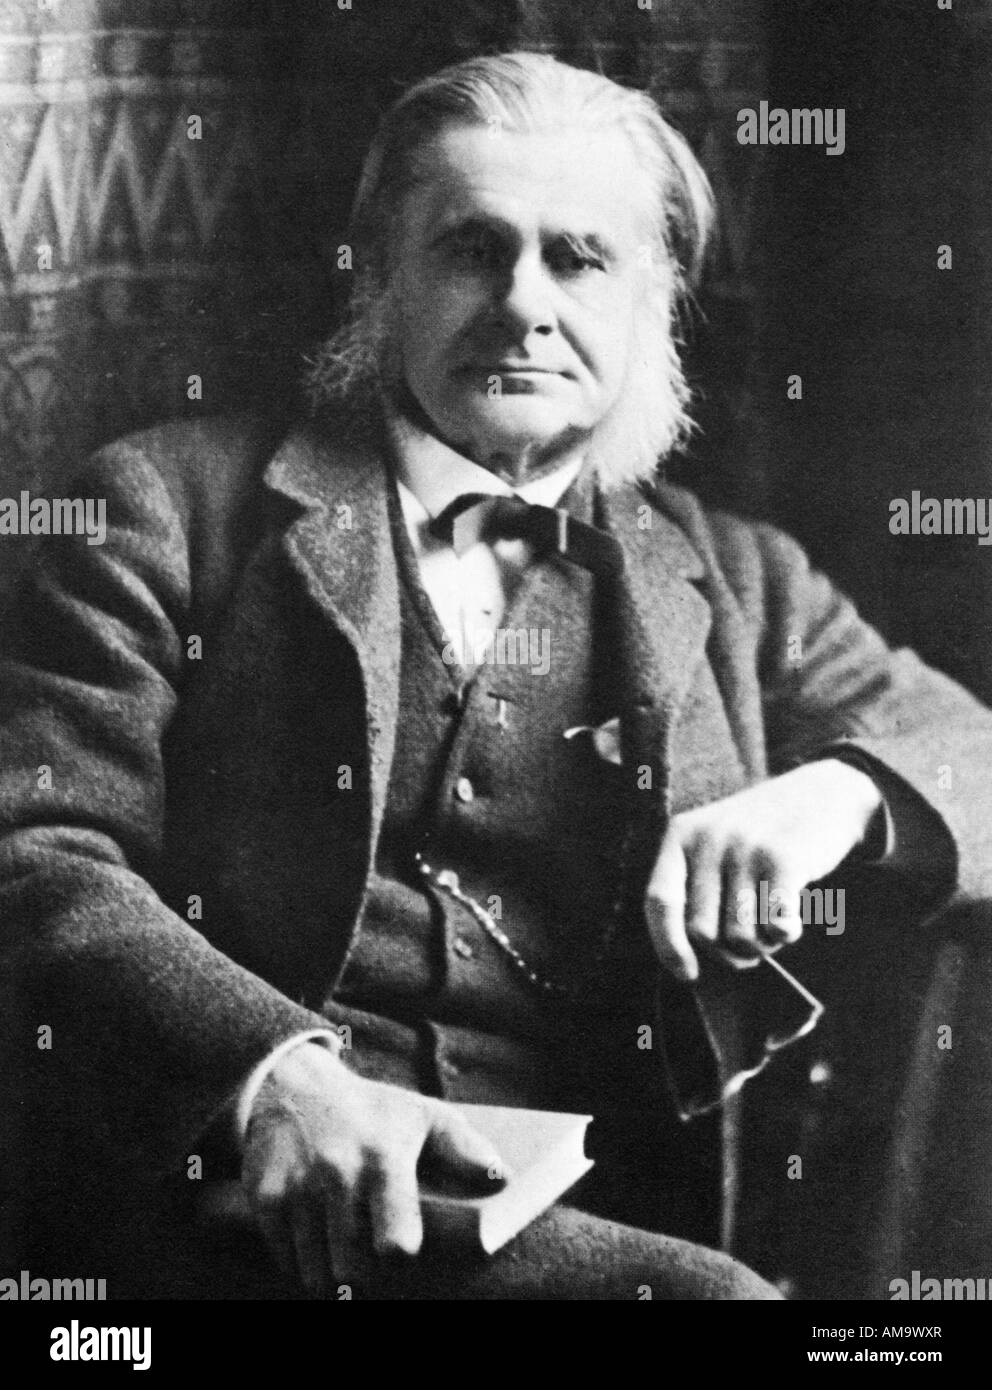 Thomas Henry Huxley 1825 1895 studio portrait photo of the eminent Victorian scientist Professor TH Huxley Stock Photo